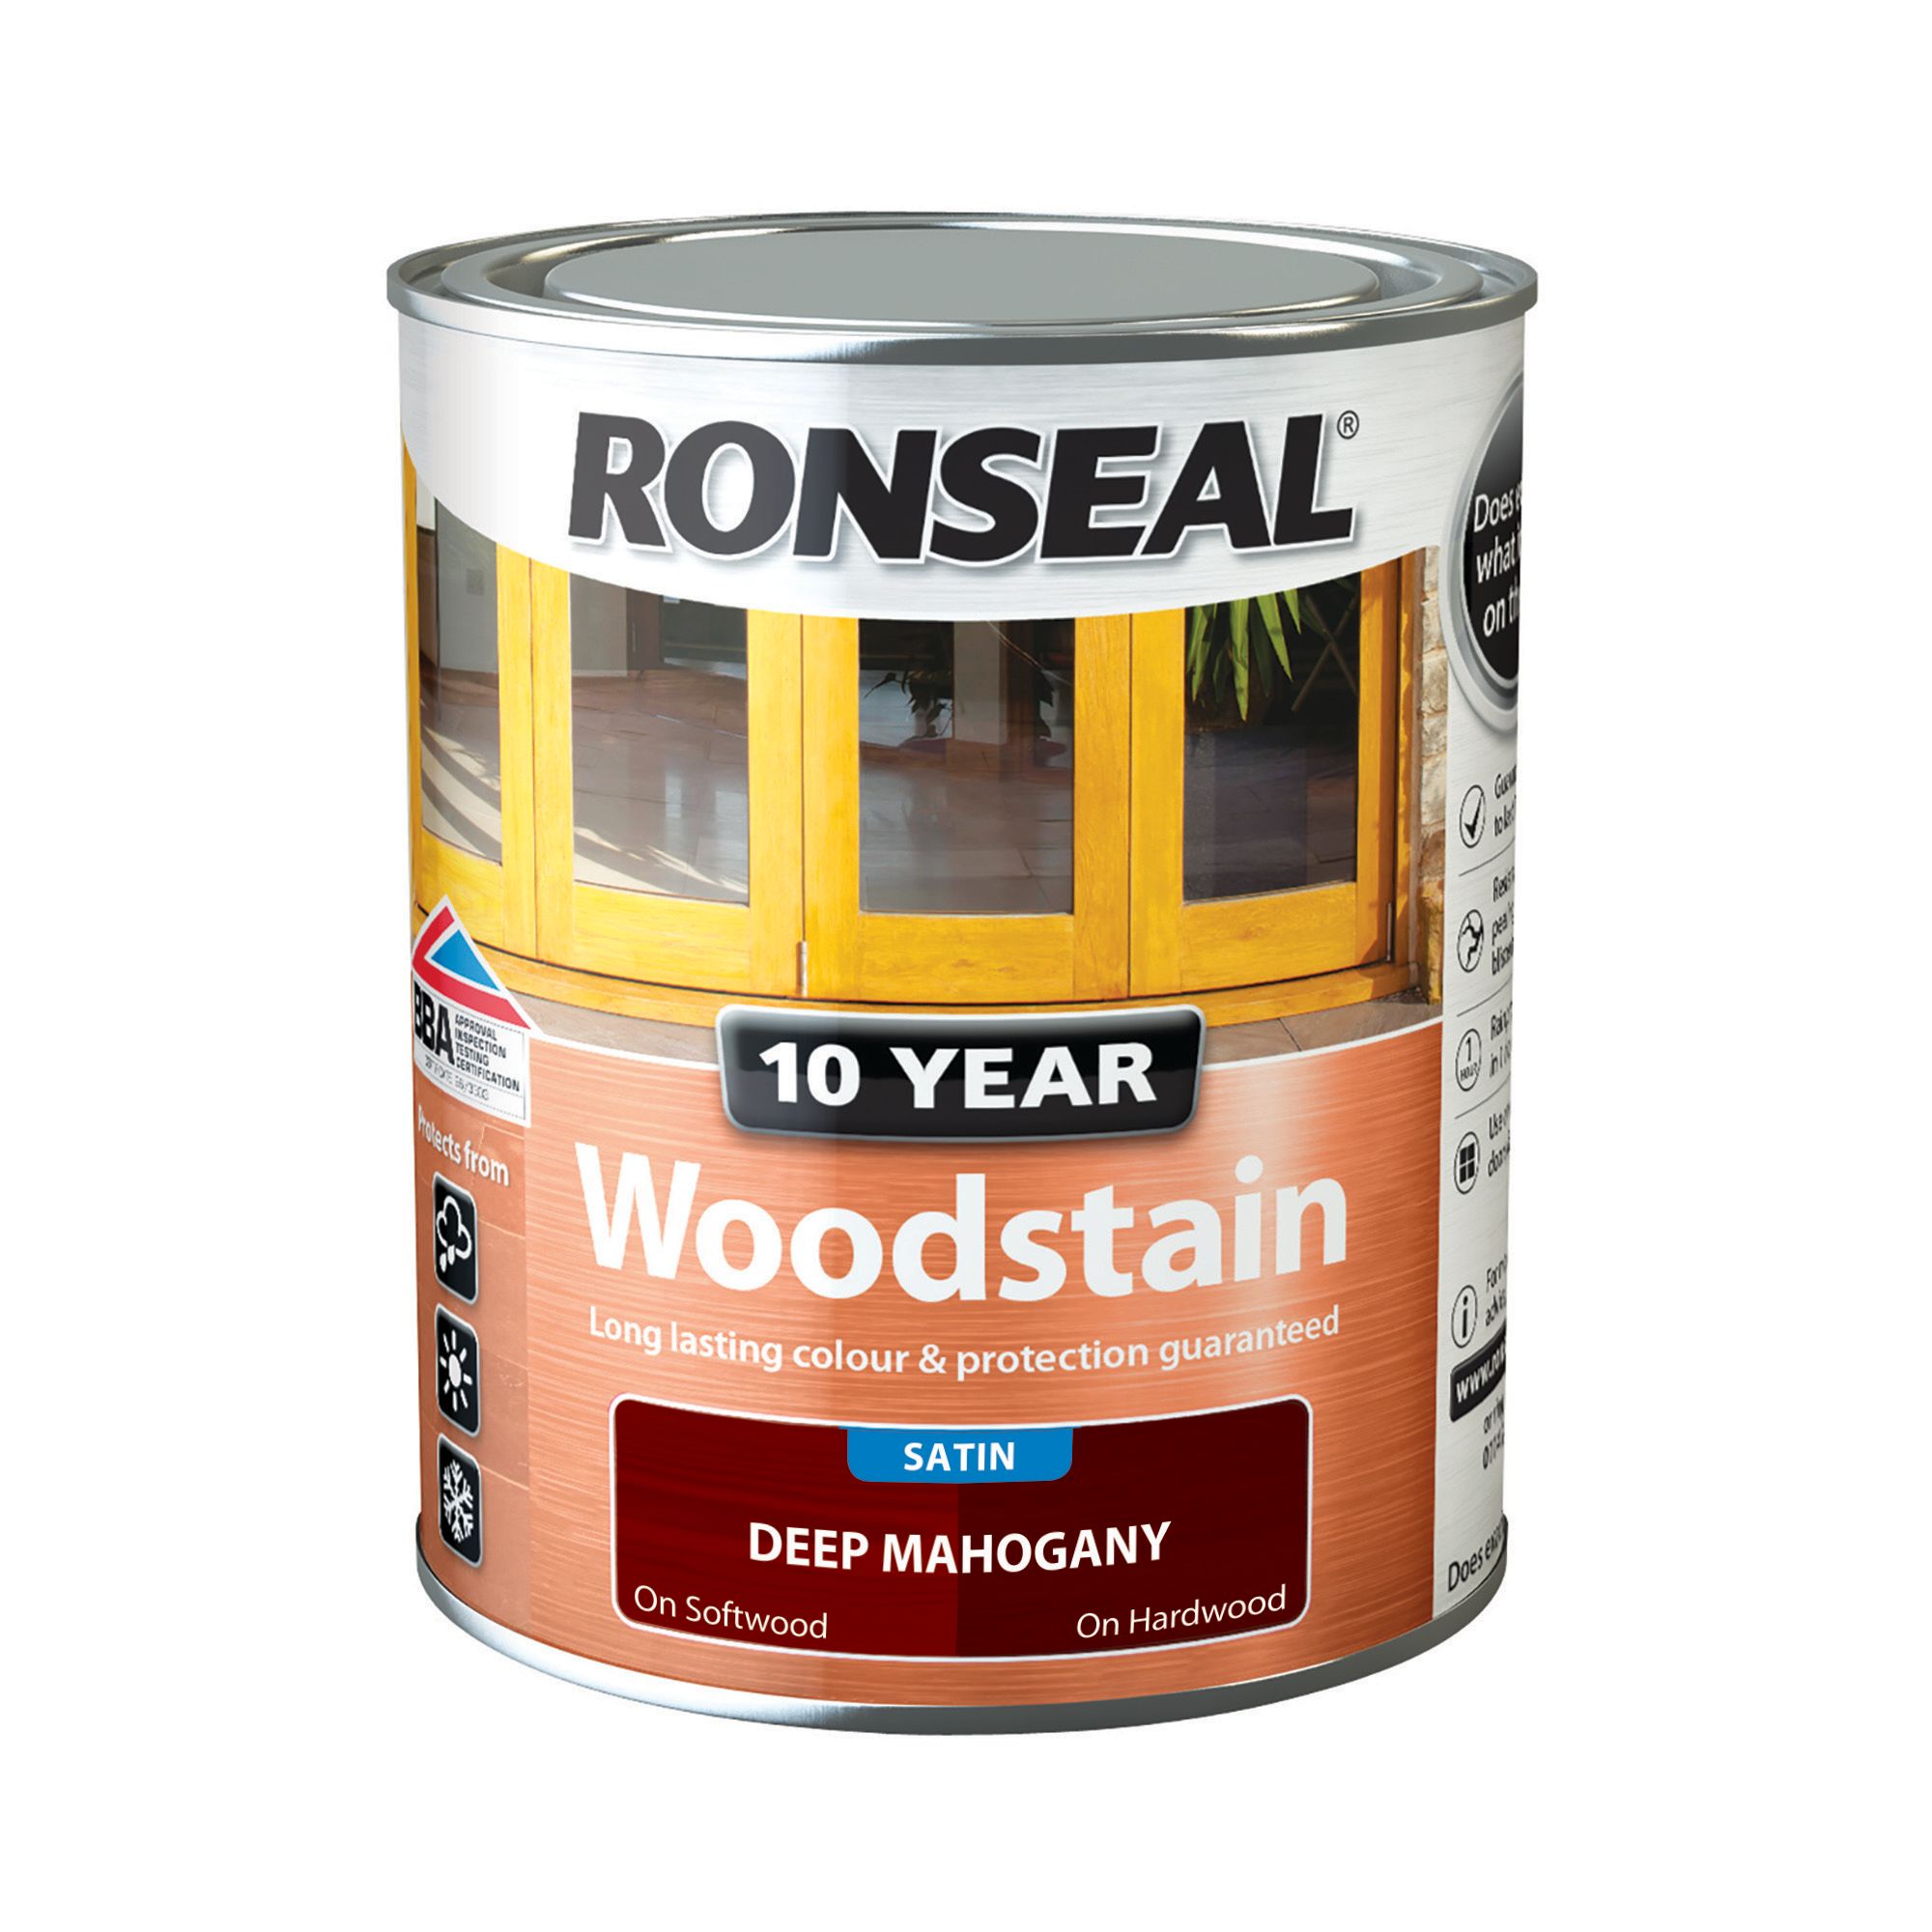 Image of Ronseal 10 Year Woodstain - Deep Mahogany 750ml